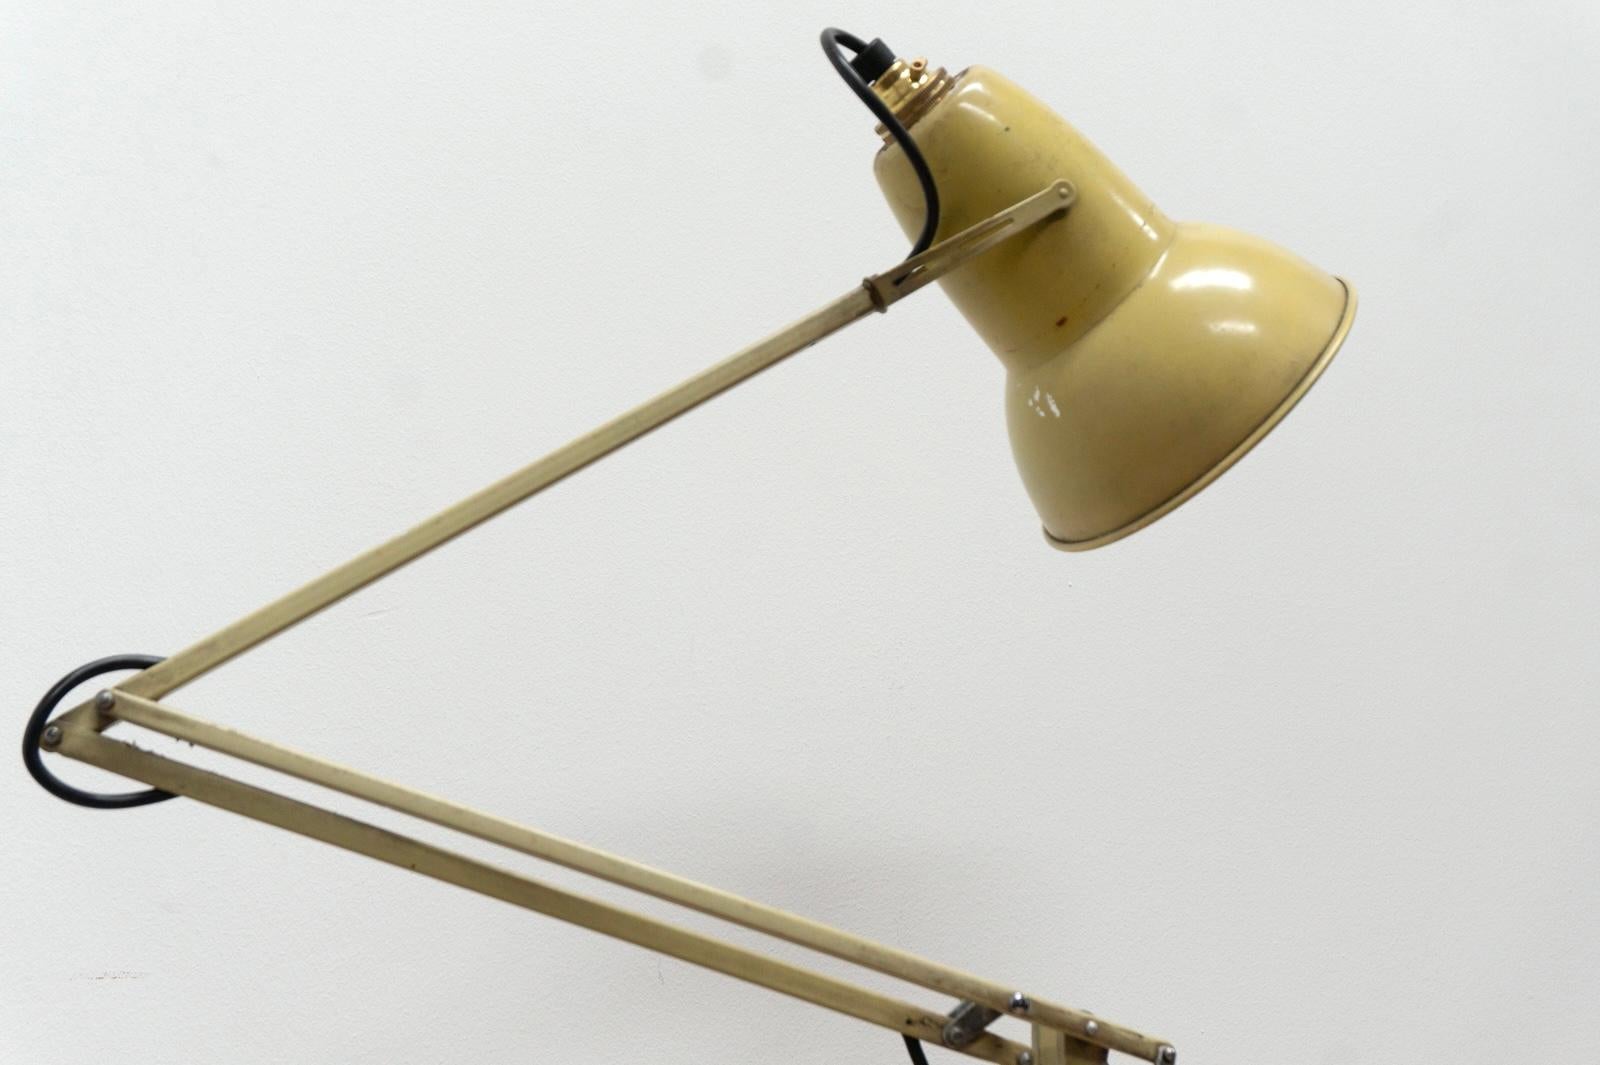 British Original Herbert Terry Anglepoise Industrial Desk Lamp Model 1227 For Sale